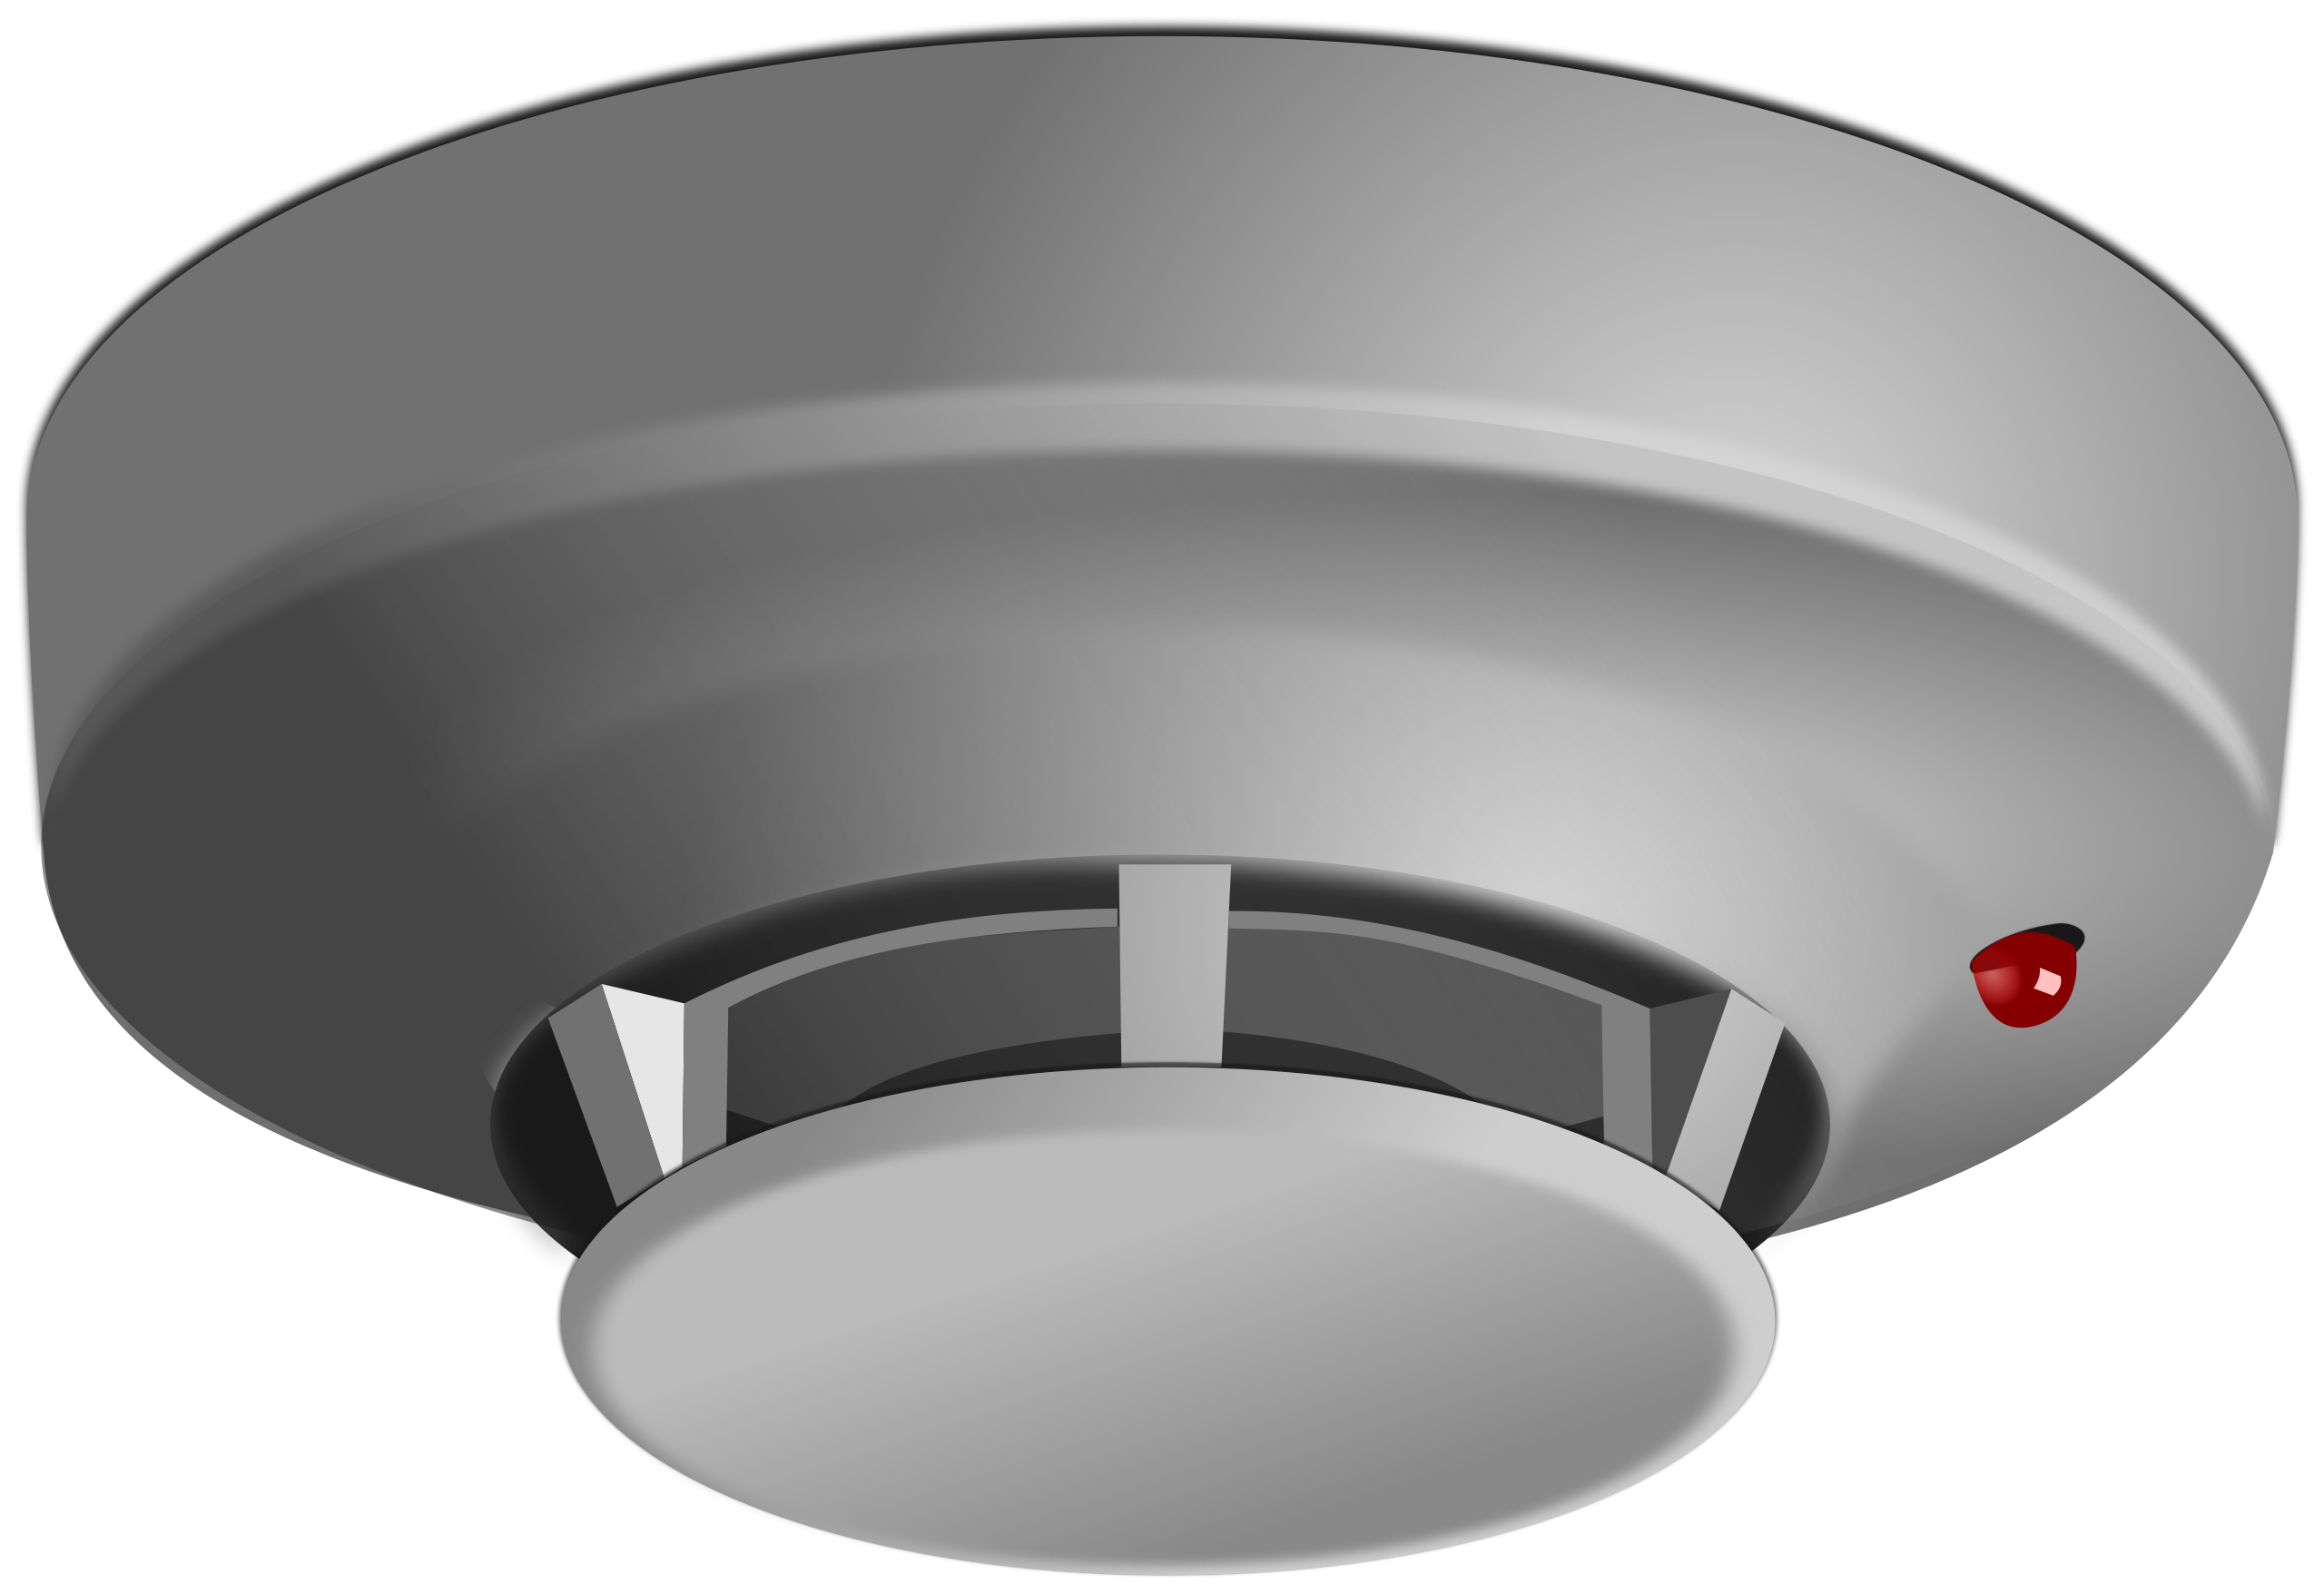 Smoke detector - Wikipedia